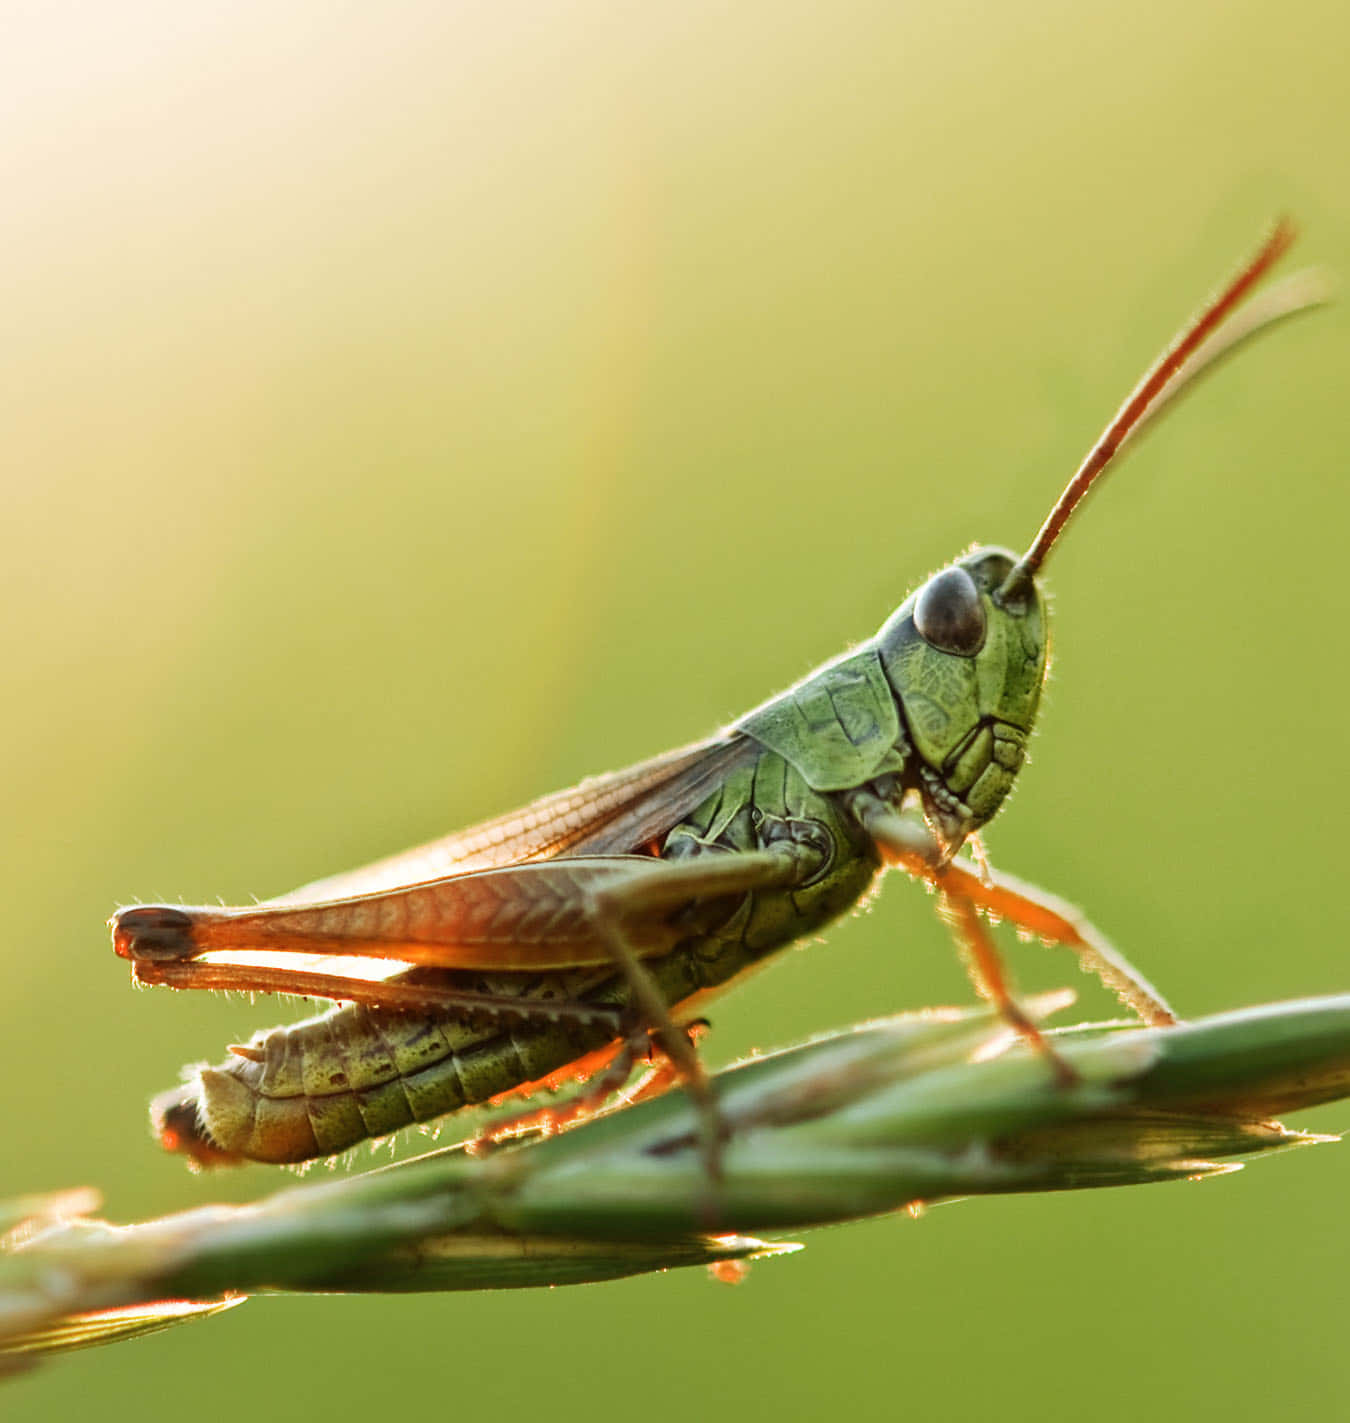 A Vibrant Grasshopper Close-Up